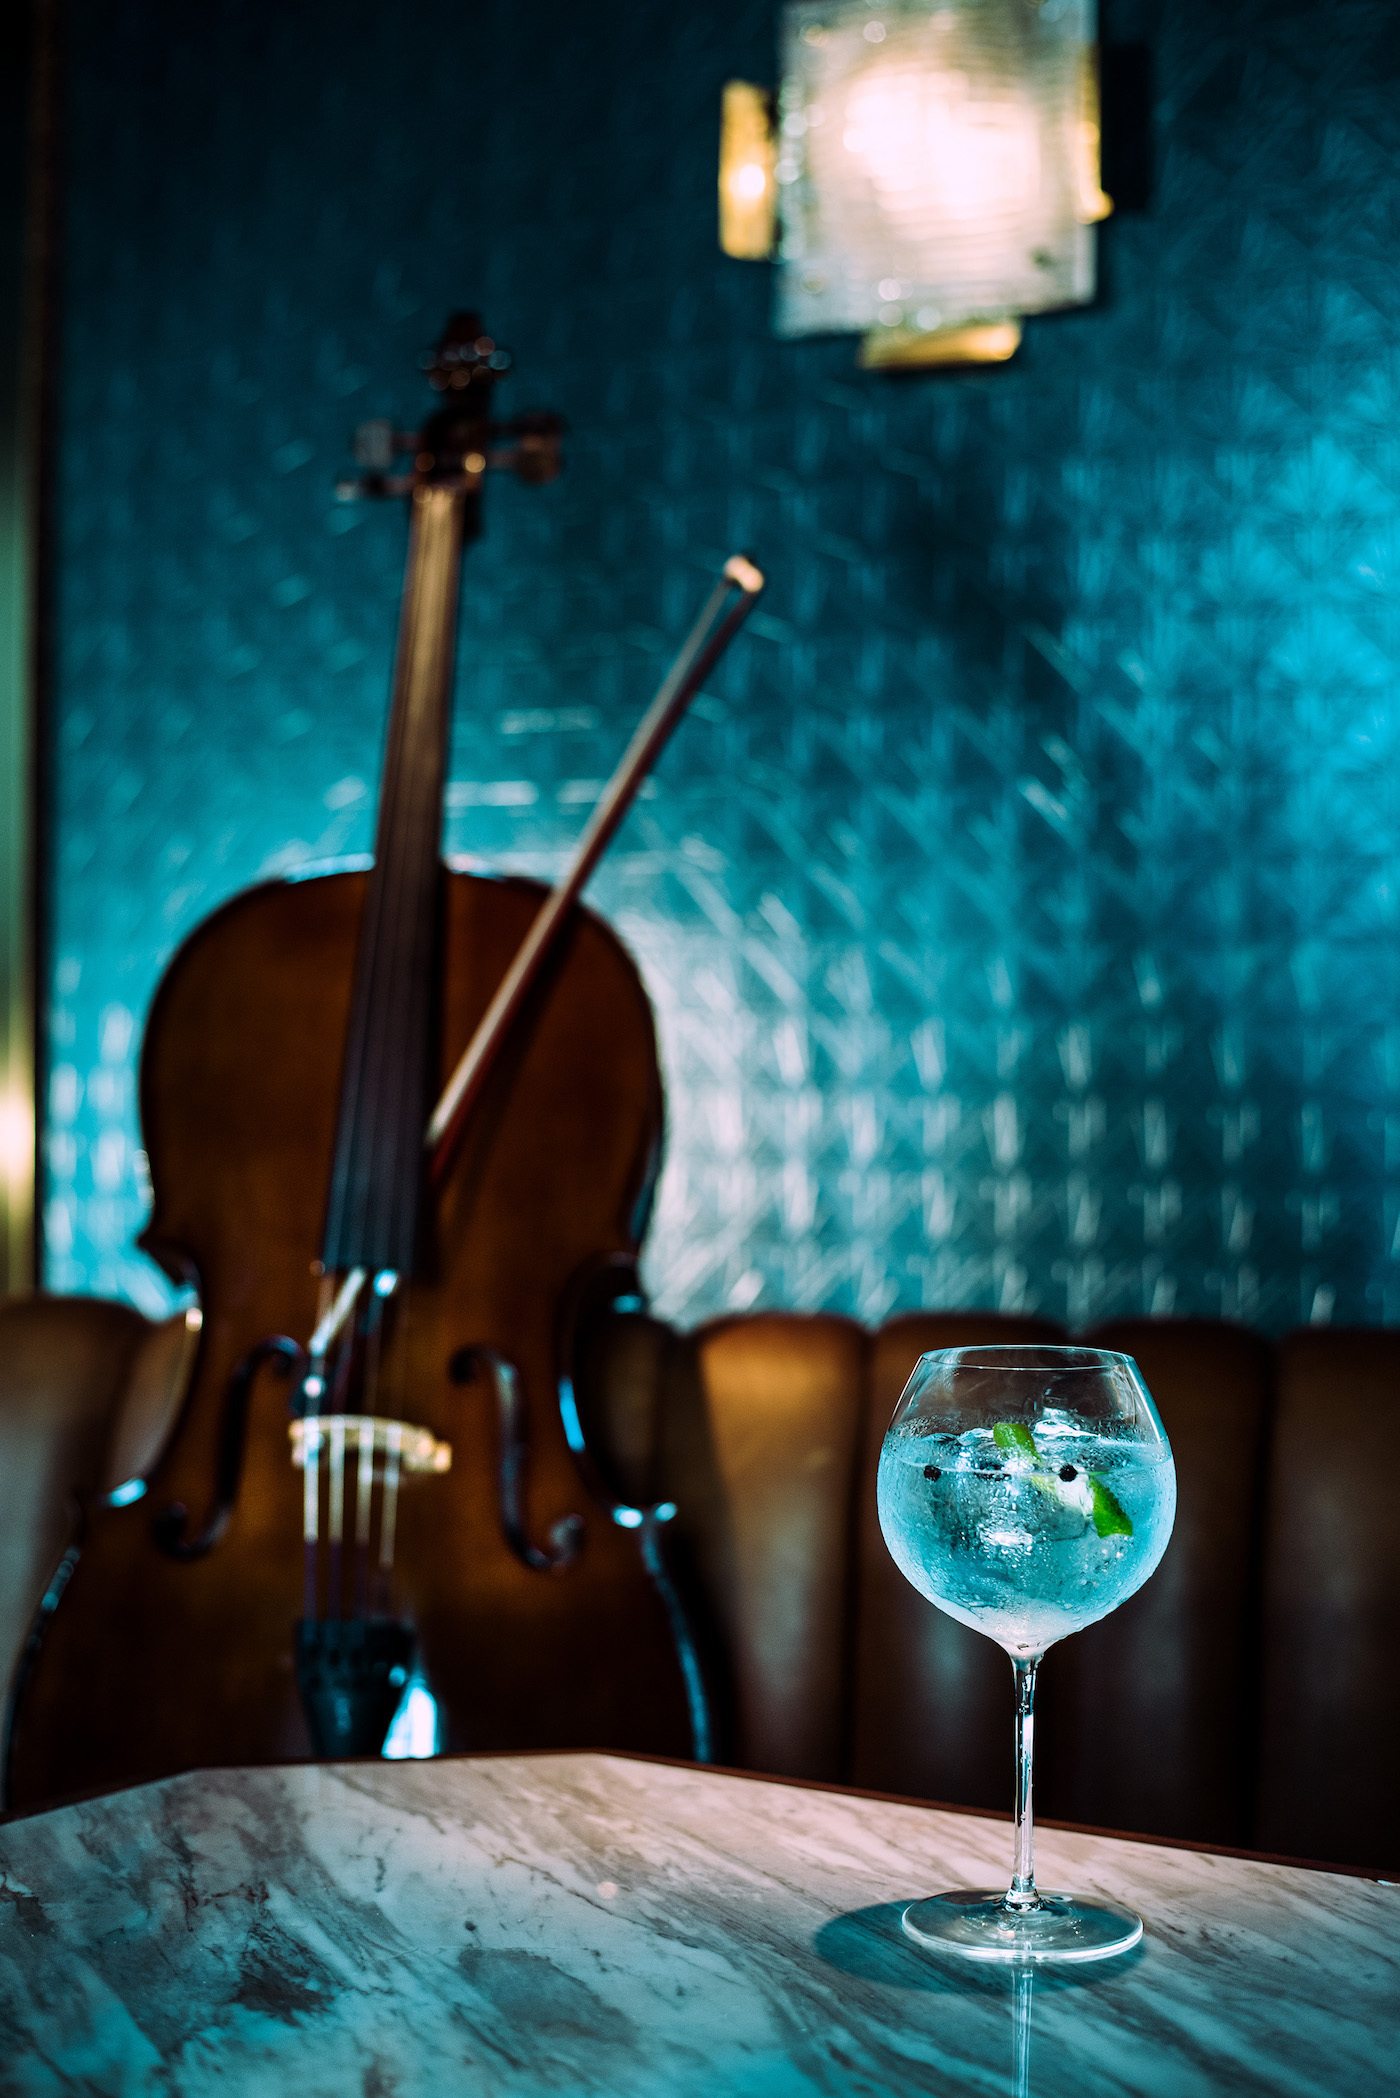 imagen 2 de The London Music N1ghts, música clásica en el Café Comercial.